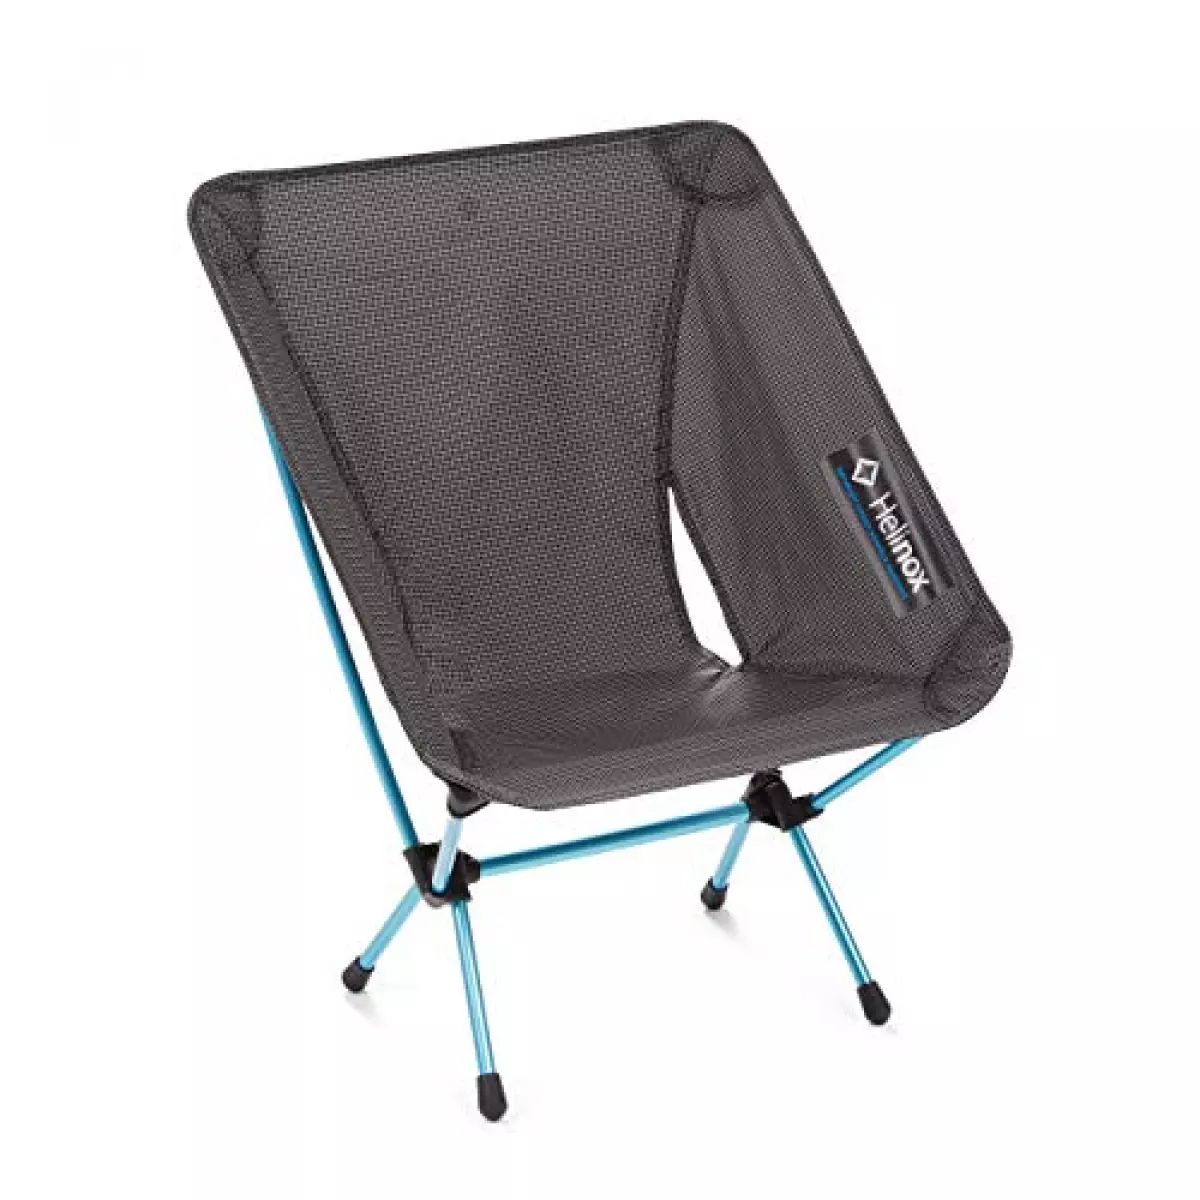 Helinox Chair Zero Ultralight Compact Camping Chair